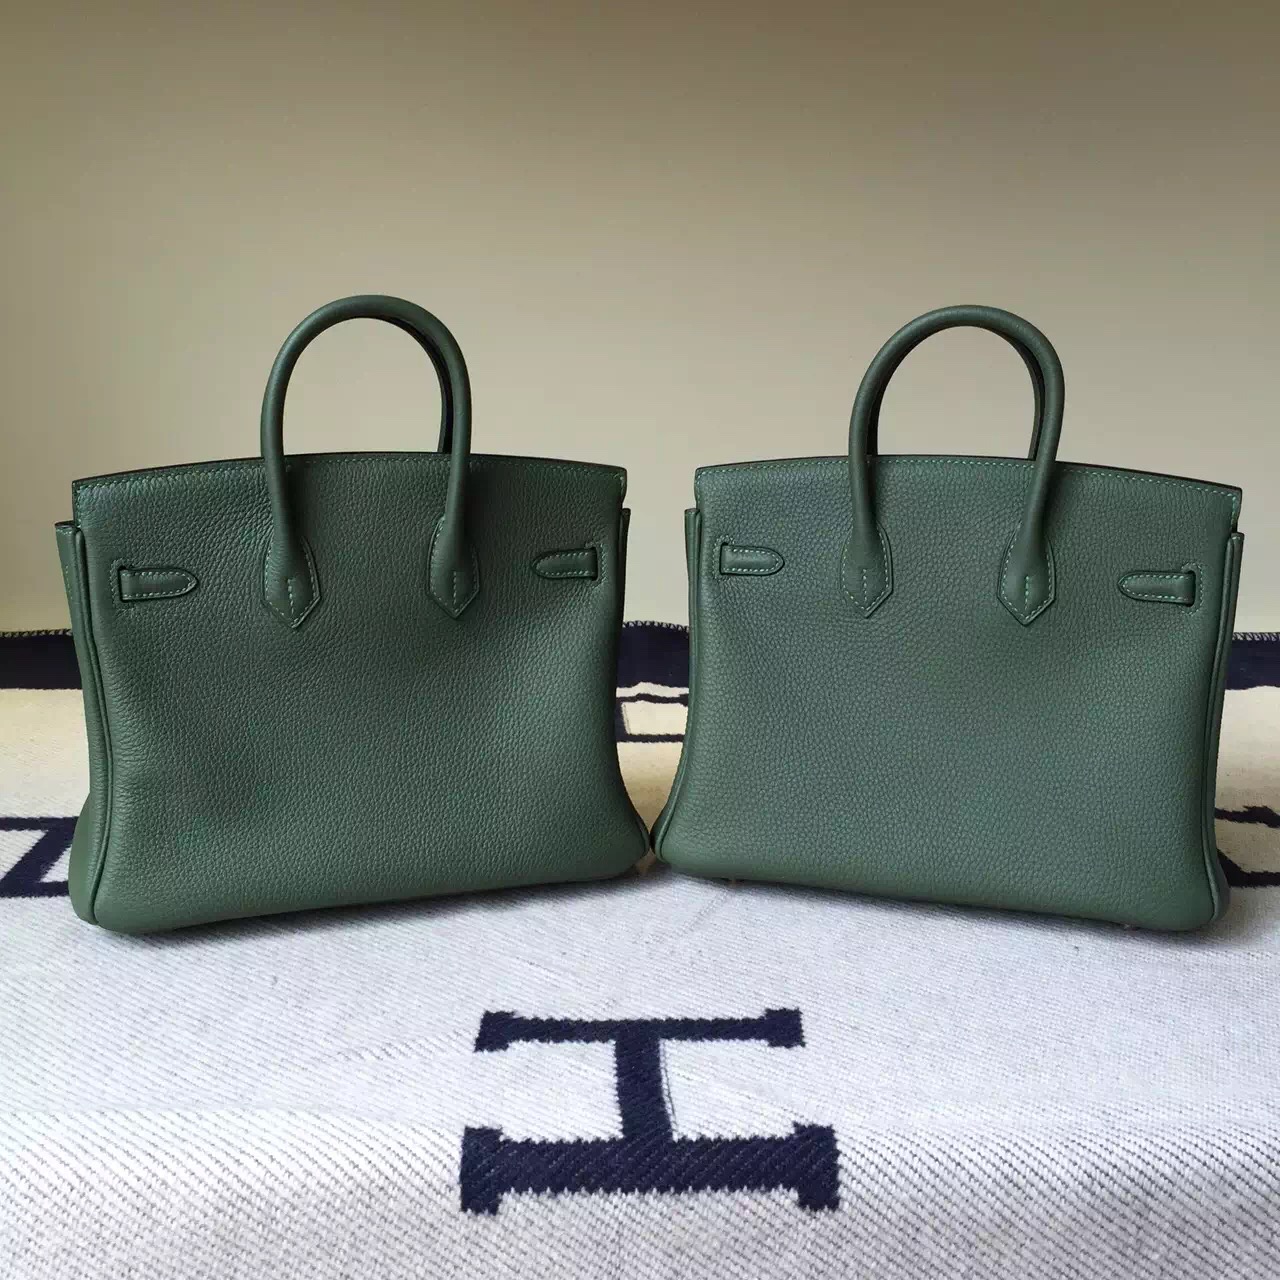 Wholesale Hermes Jungle Green Togo Leather Birkin35cm Tote Bag